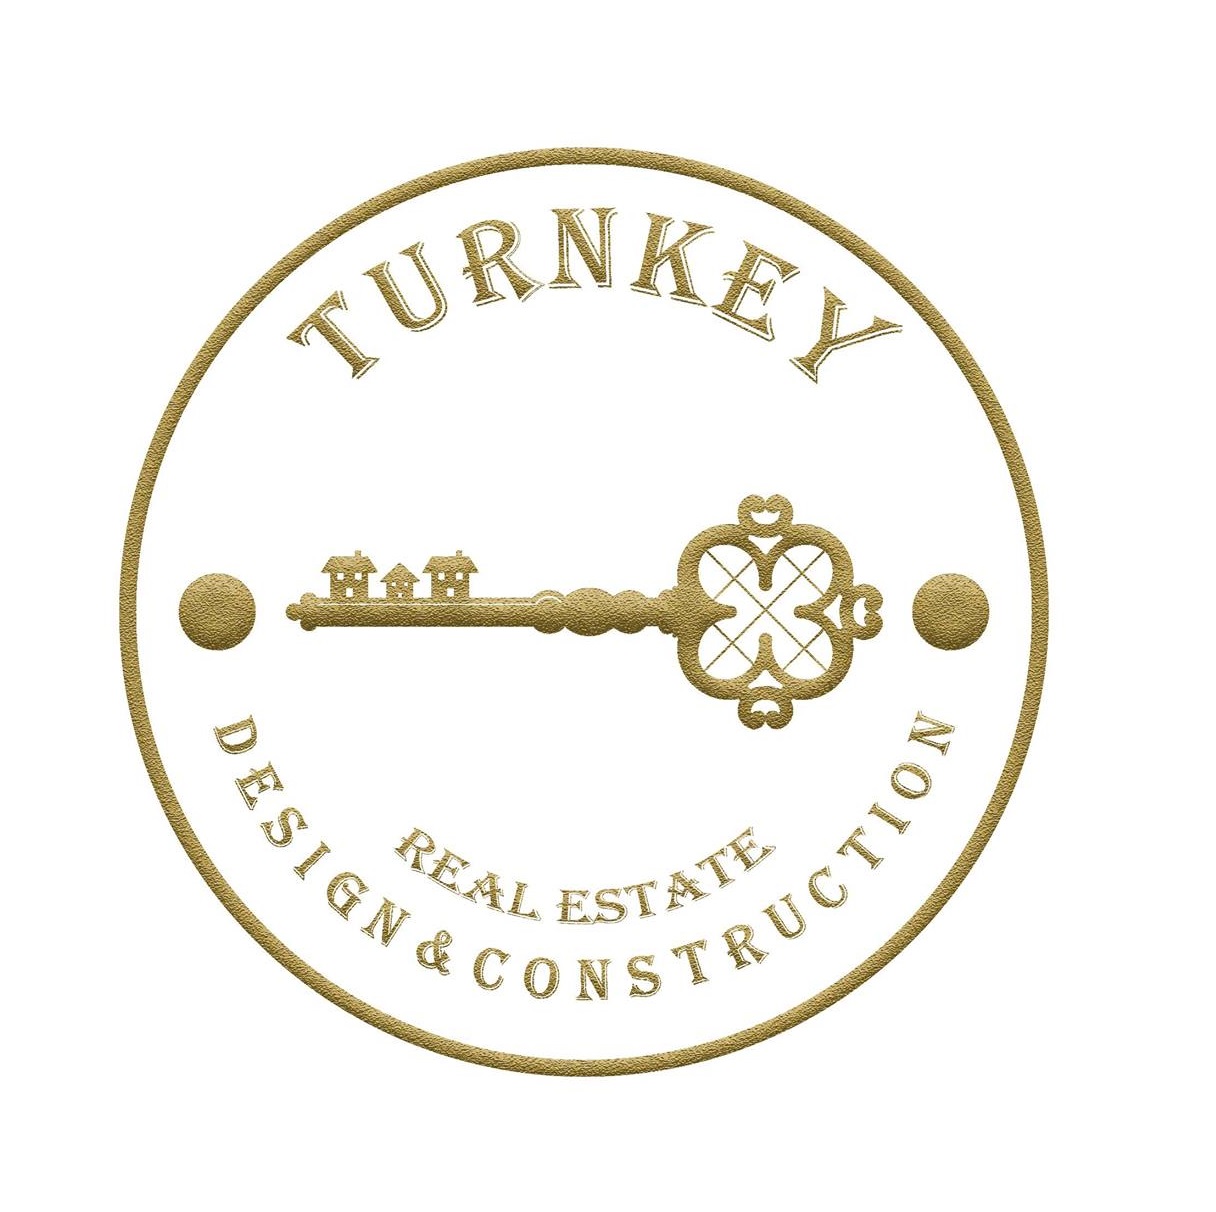 Turnkey Real Estate